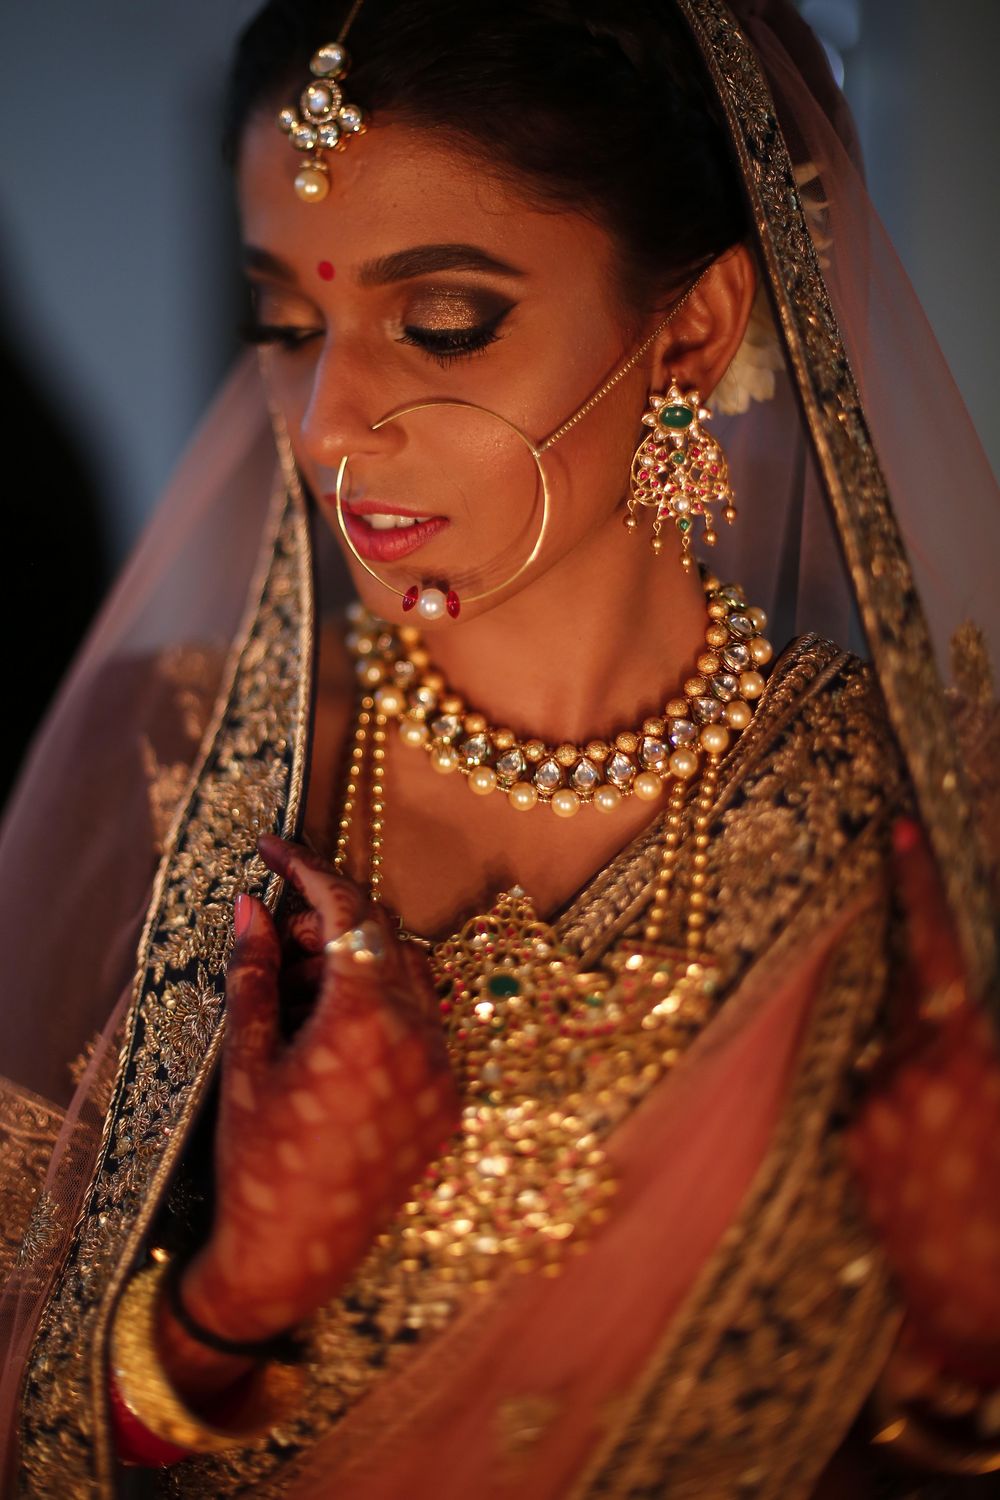 Photo From weddings 2016-17 - By Sakshi Malik Studio